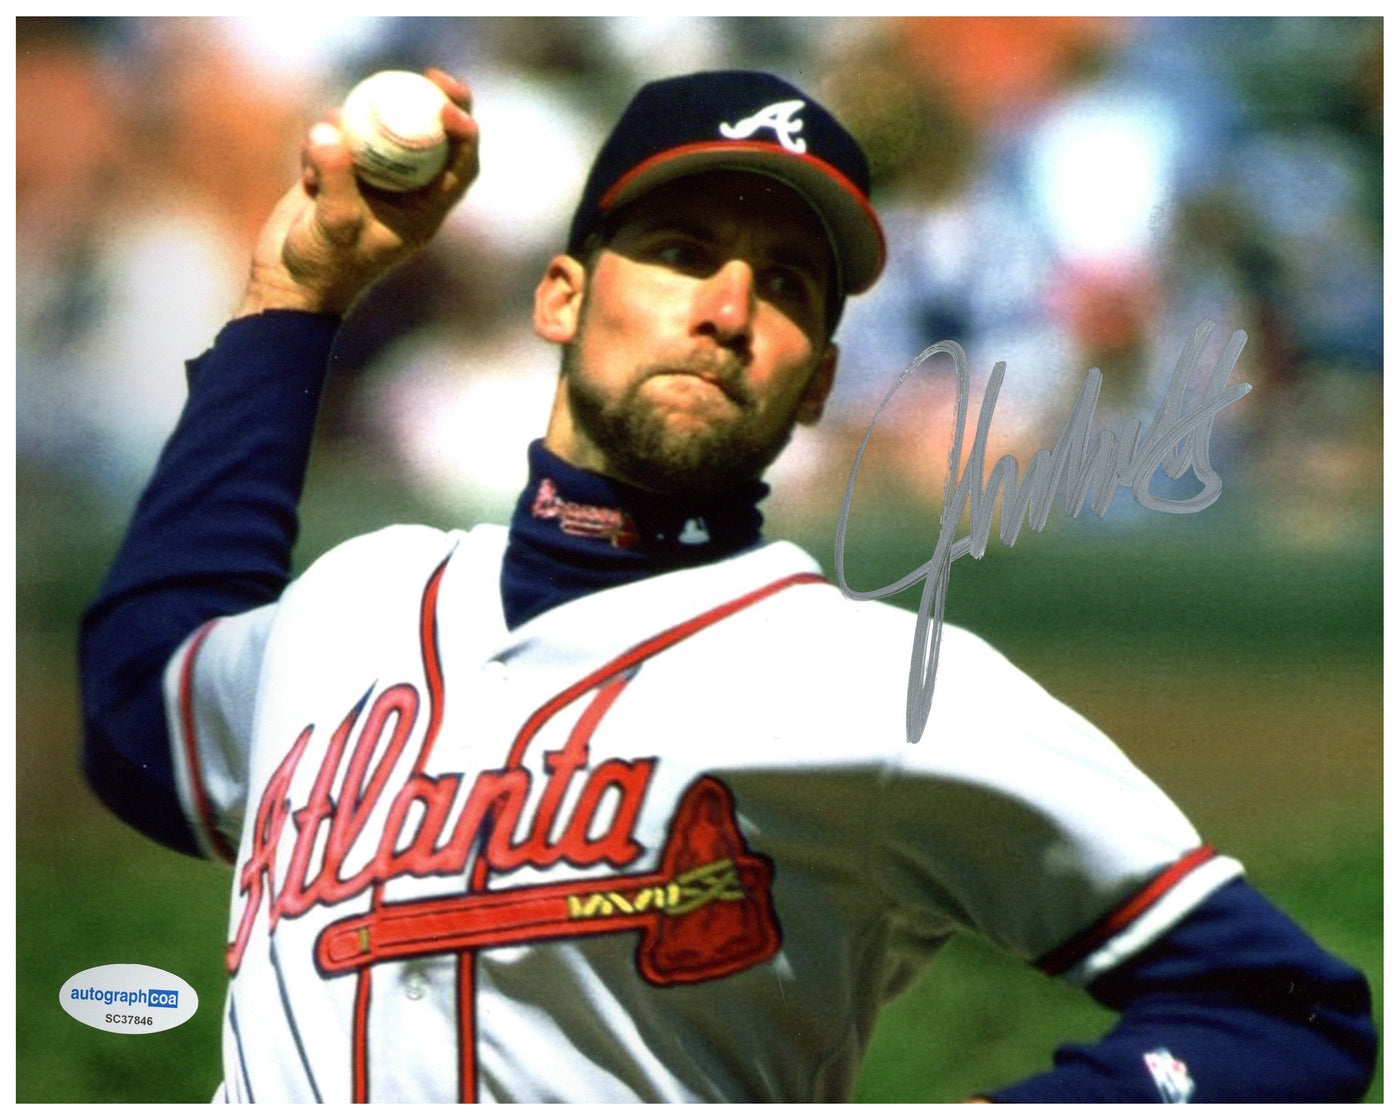 John Smoltz Signed 8x10 Photo Atlanta Braves Autographed Autograph COA